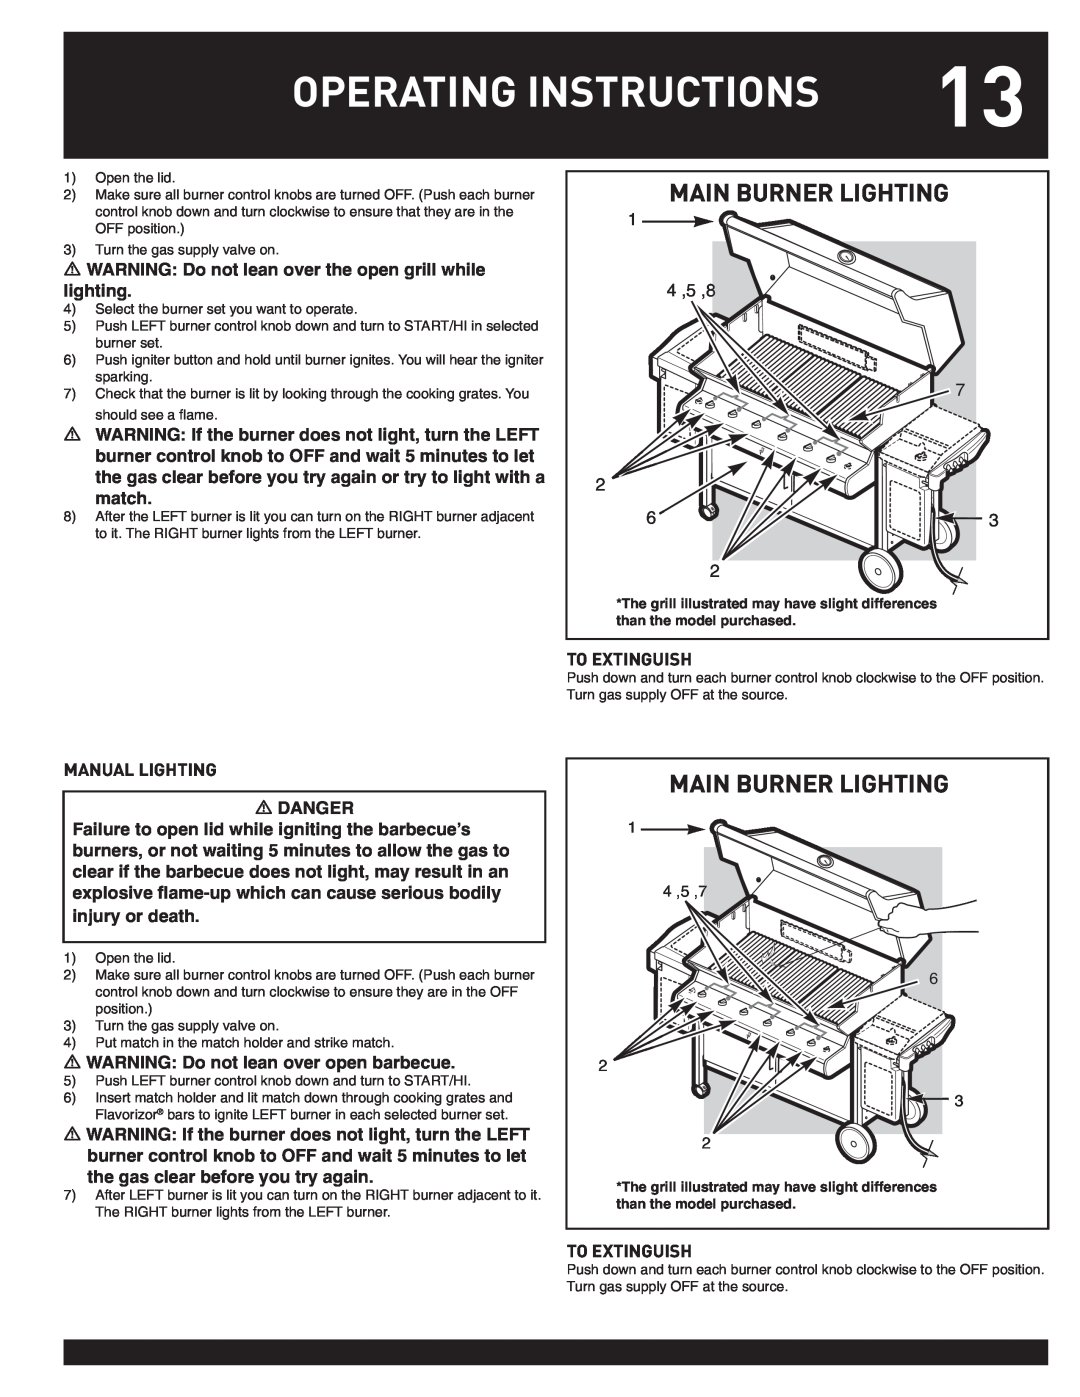 Weber SUMMIT manual Operating Instructions, Main Burner Lighting, Danger 